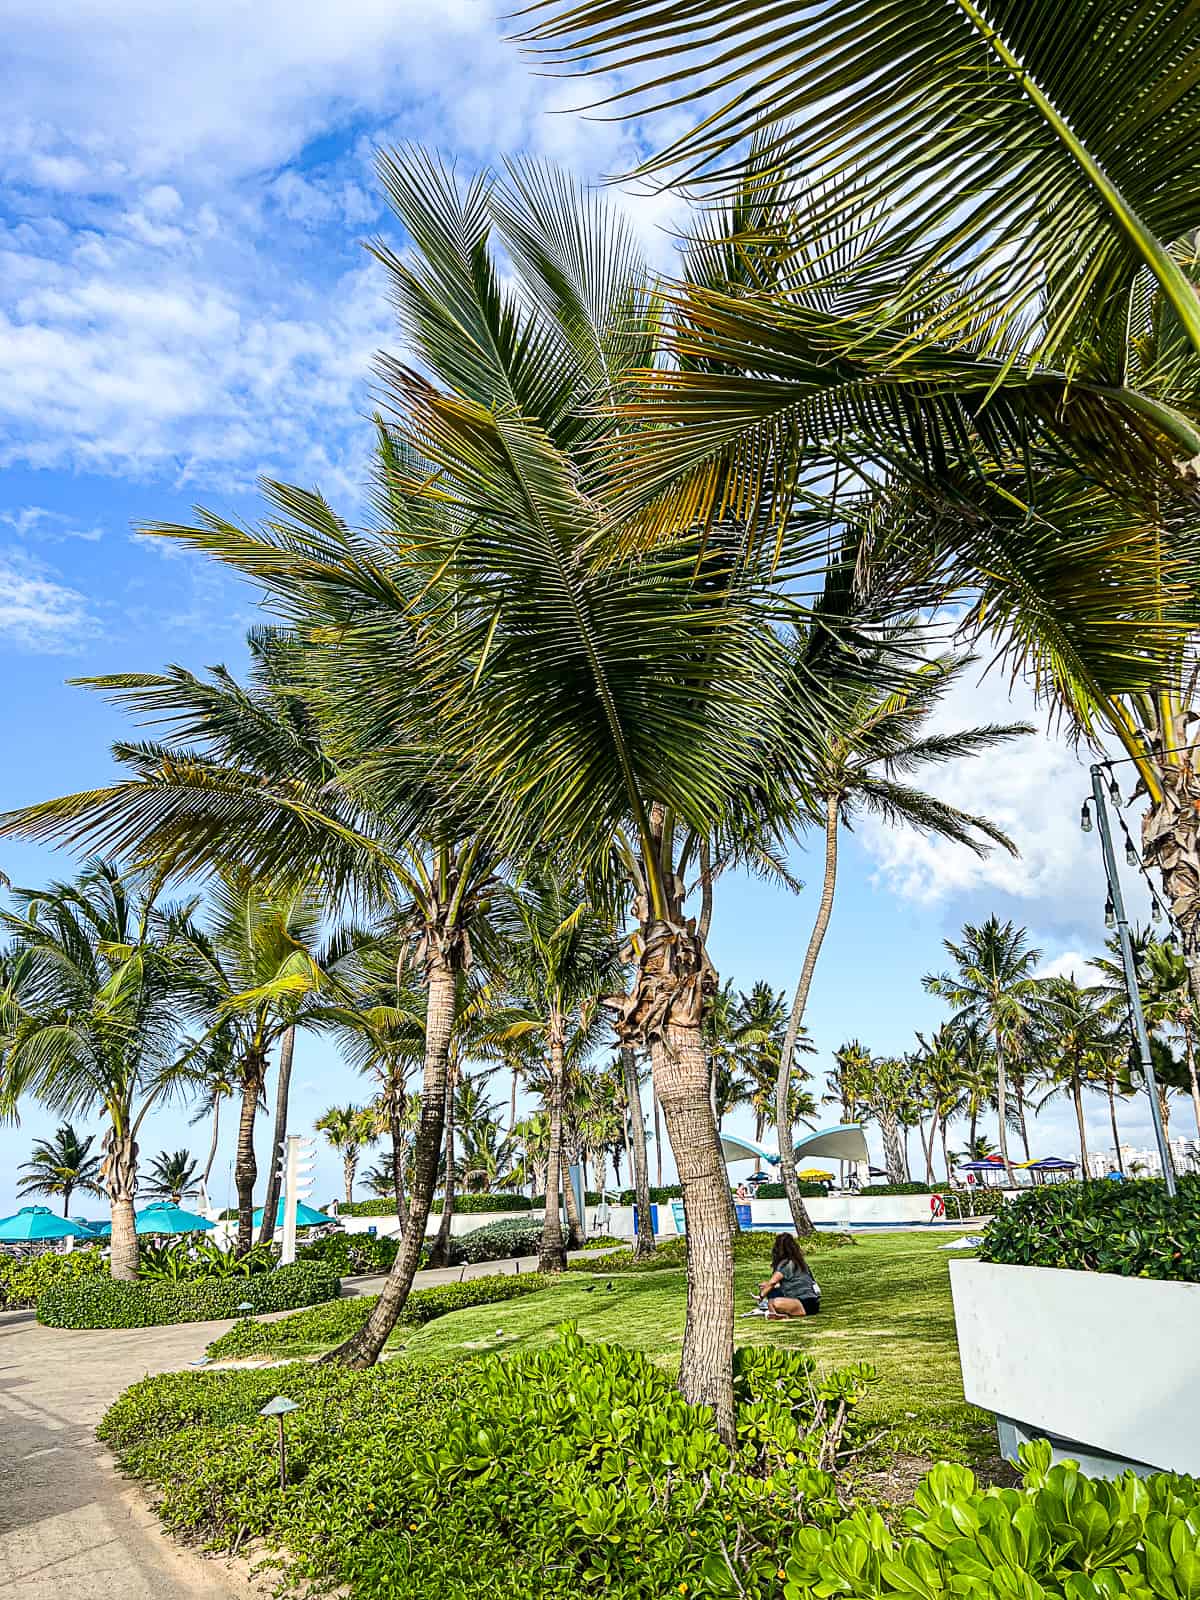 San Juan Puerto Rico Caribe Hilton Resort Views of the beaches